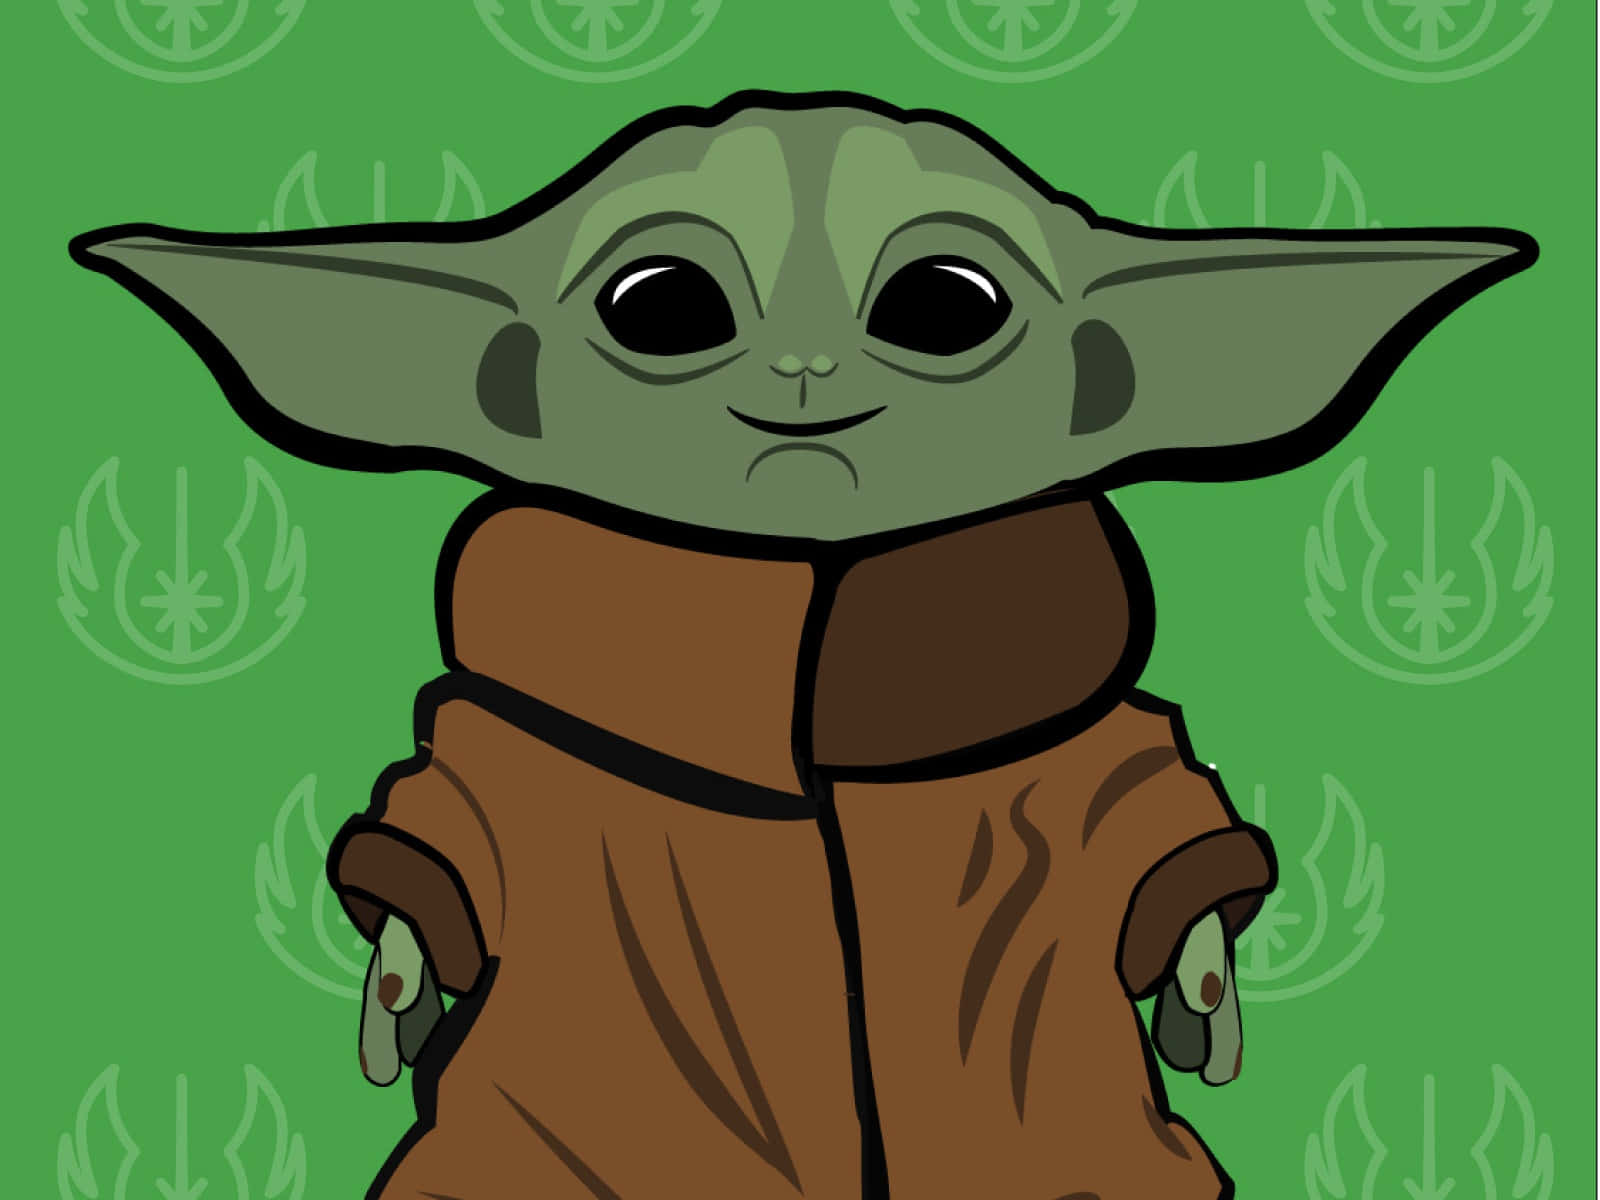 Såsød Som Man Kan Være, Det Er Baby Yoda!